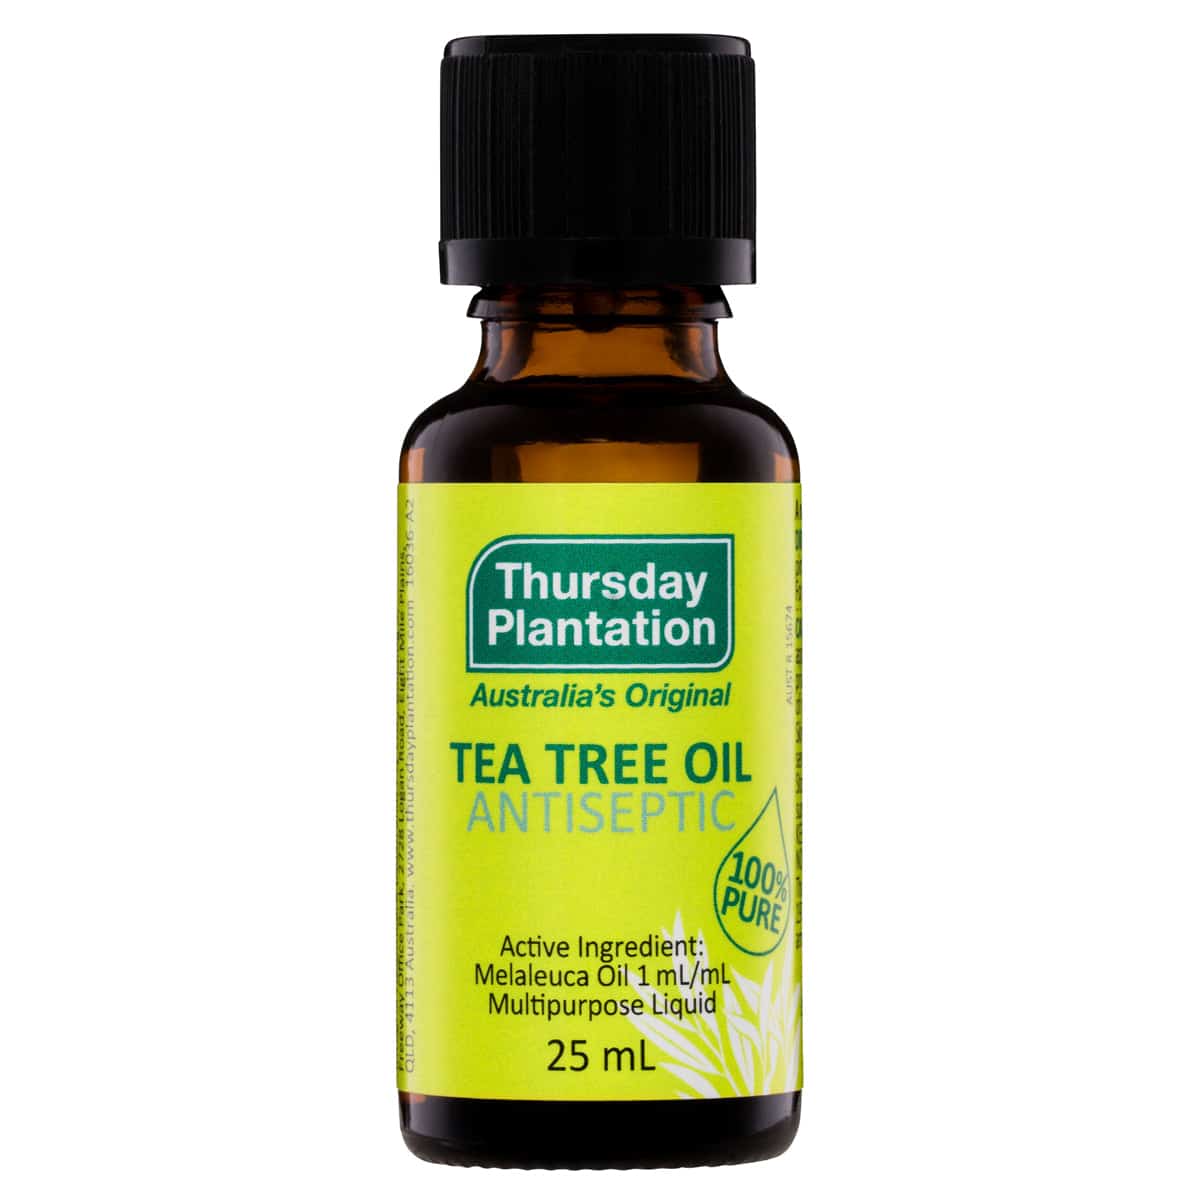 Thursday Plantation Tea Tree Oil 25mL  Better Value Pharmacy Box Hill